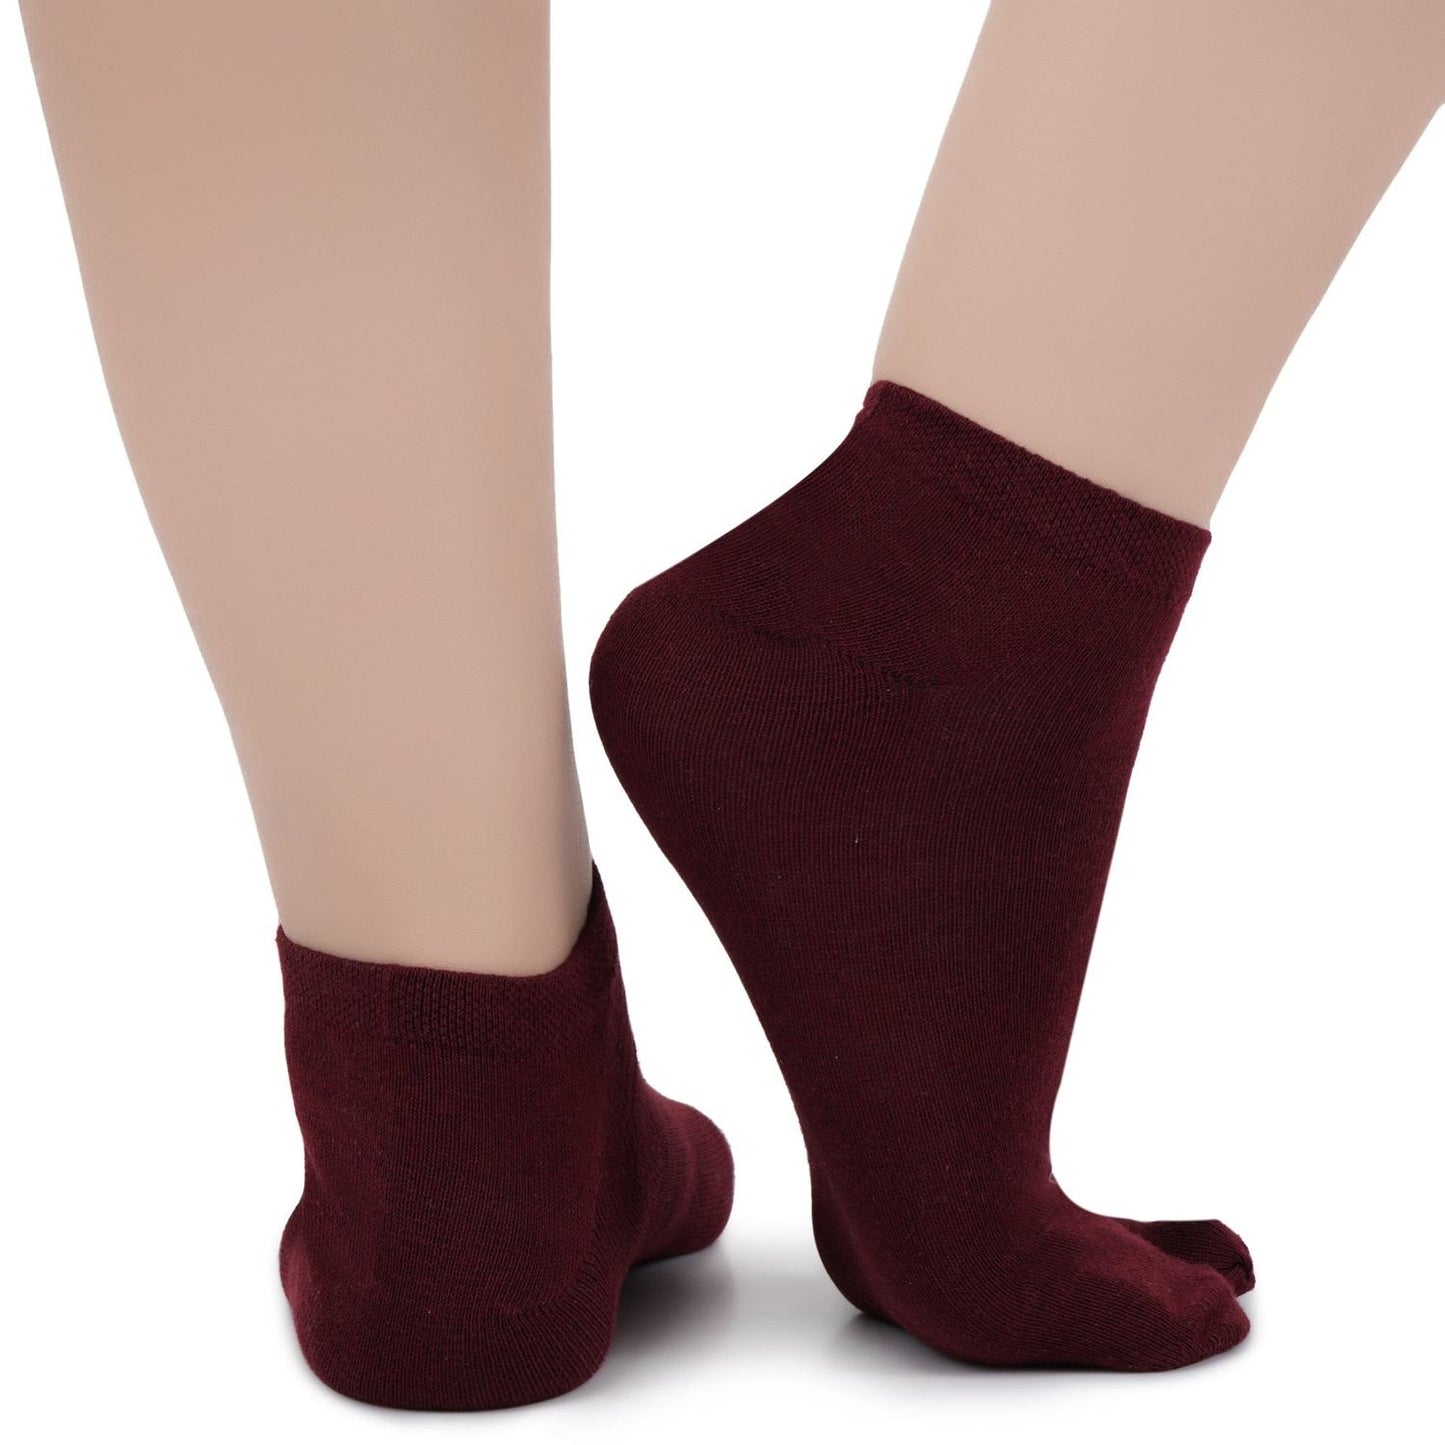 Low Ankle Length Thumb Socks - Maroon